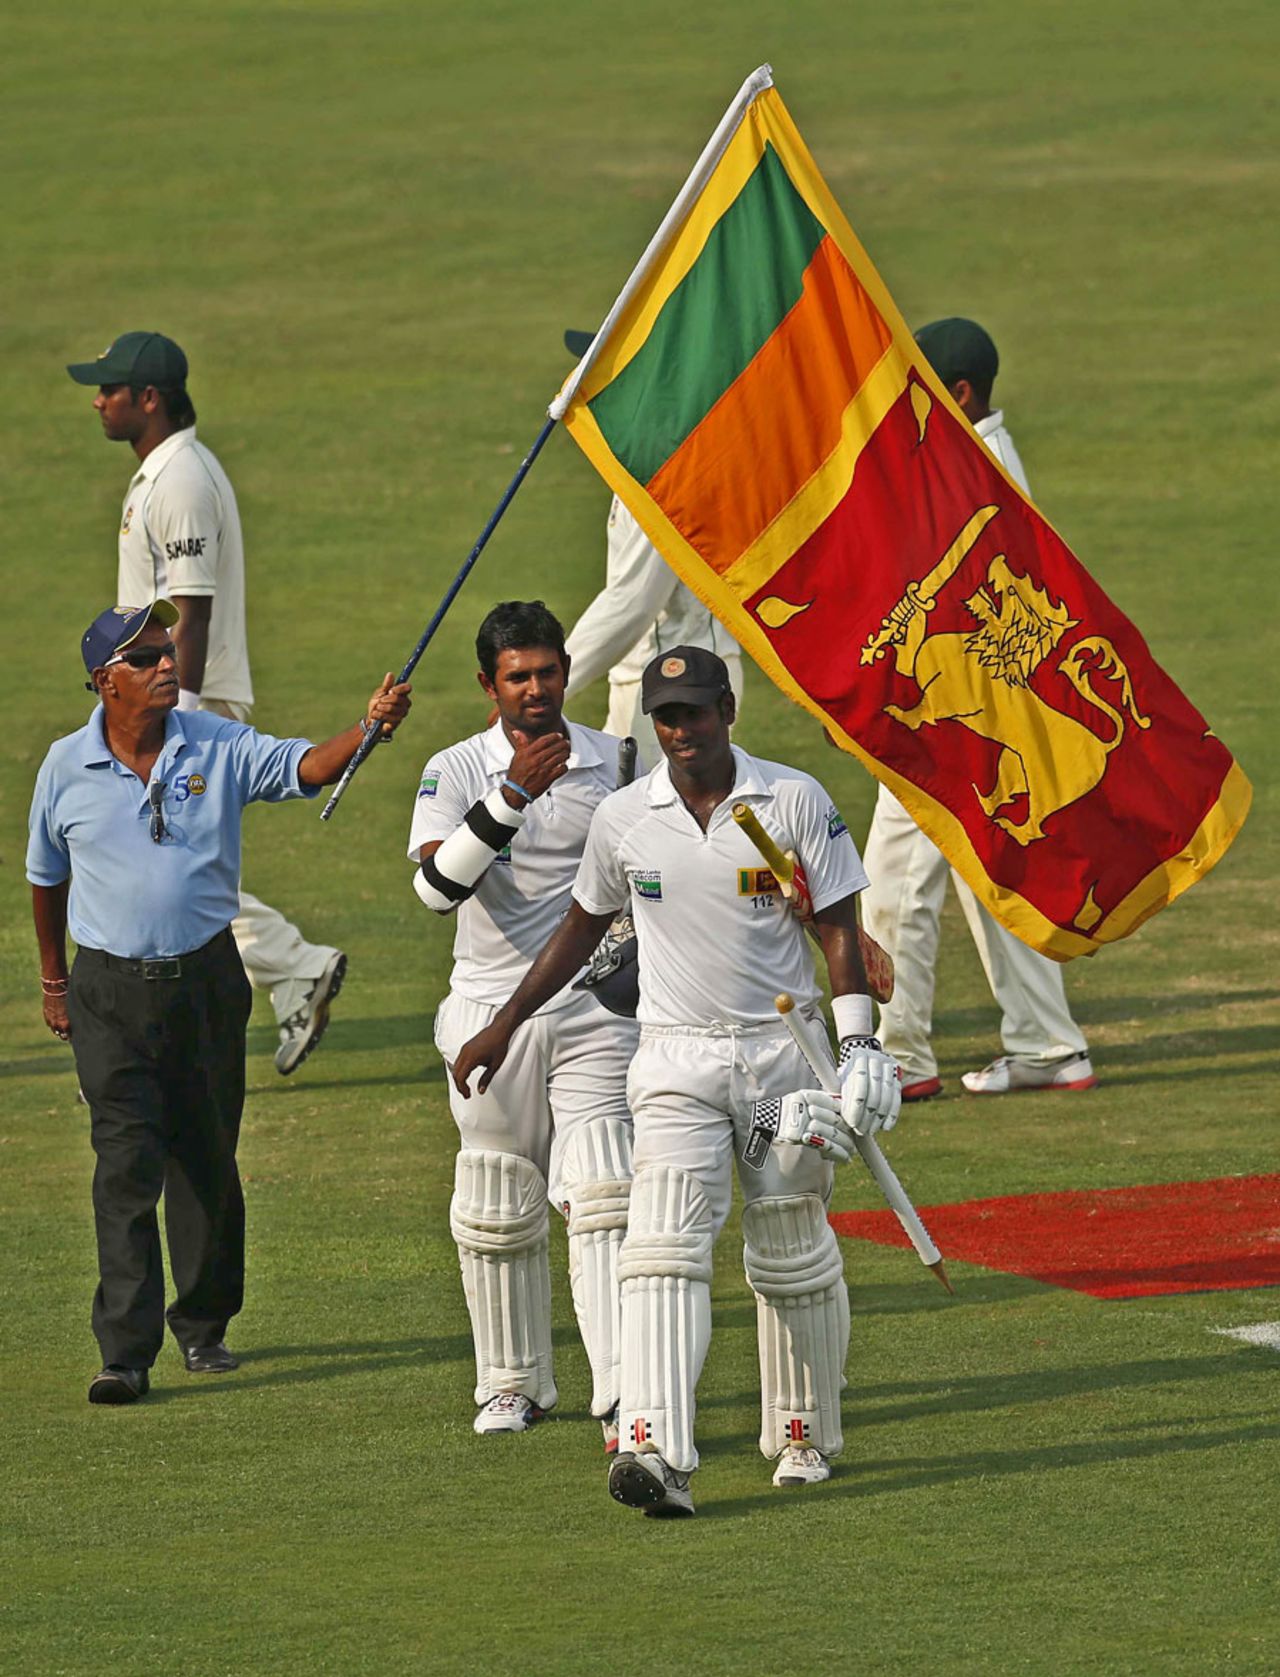 Lahiru Thirimanne and Angelo Mathews walk off after Sri Lanka's win, Sri Lanka v Bangladesh, 2nd Test, 4th day, Colombo, March 19, 2013